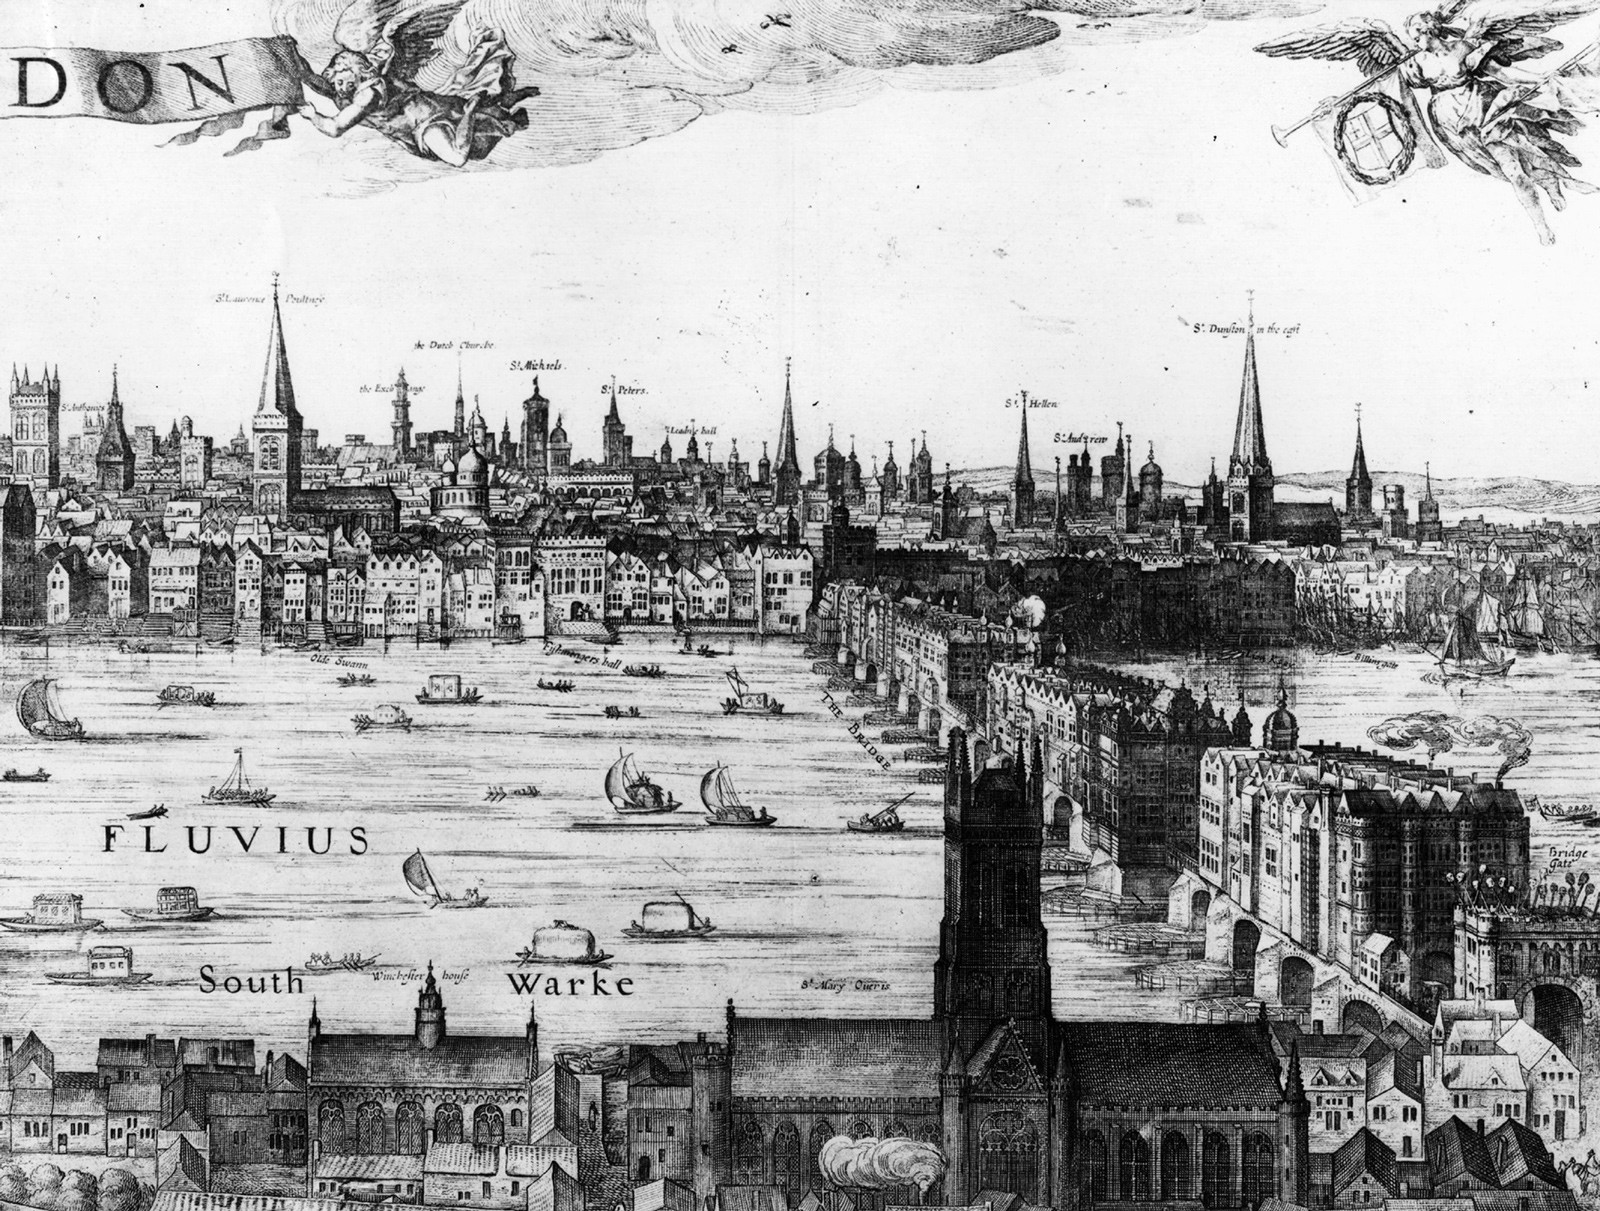 Vischer's Panorama of London, showing London Bridge, 1616.